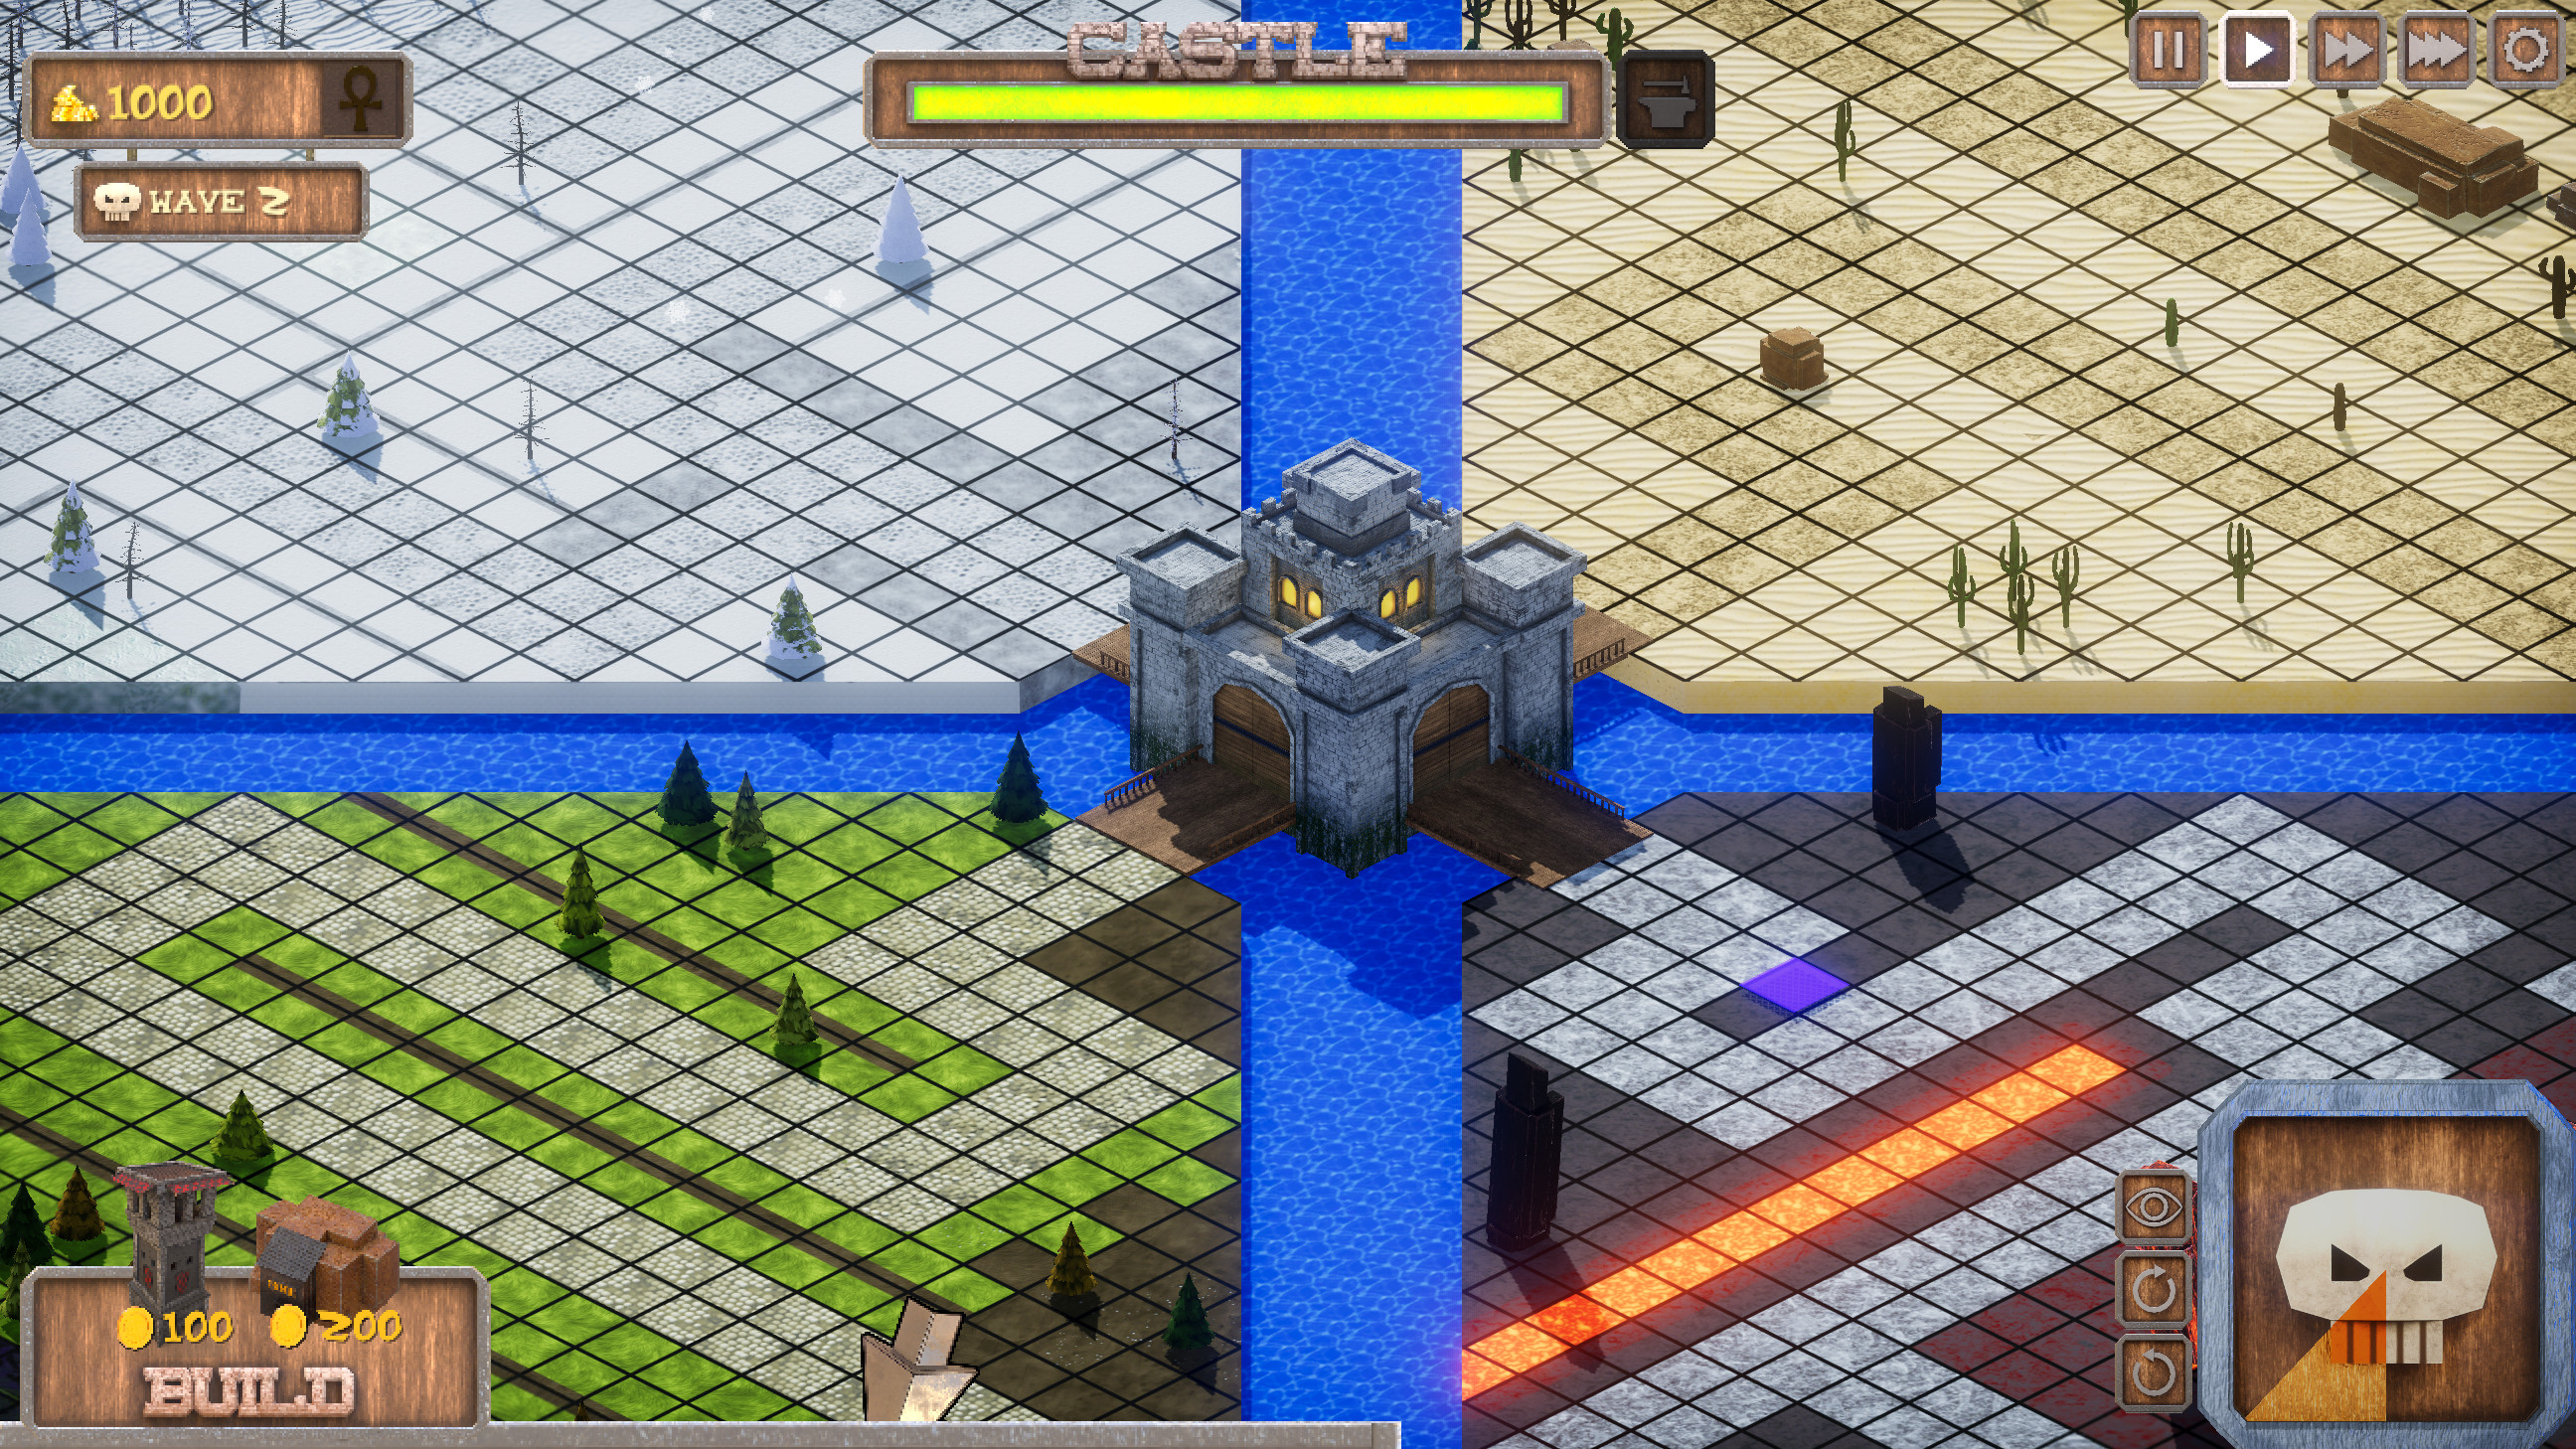 Goblins Keep Coming - Tower Defense screenshot